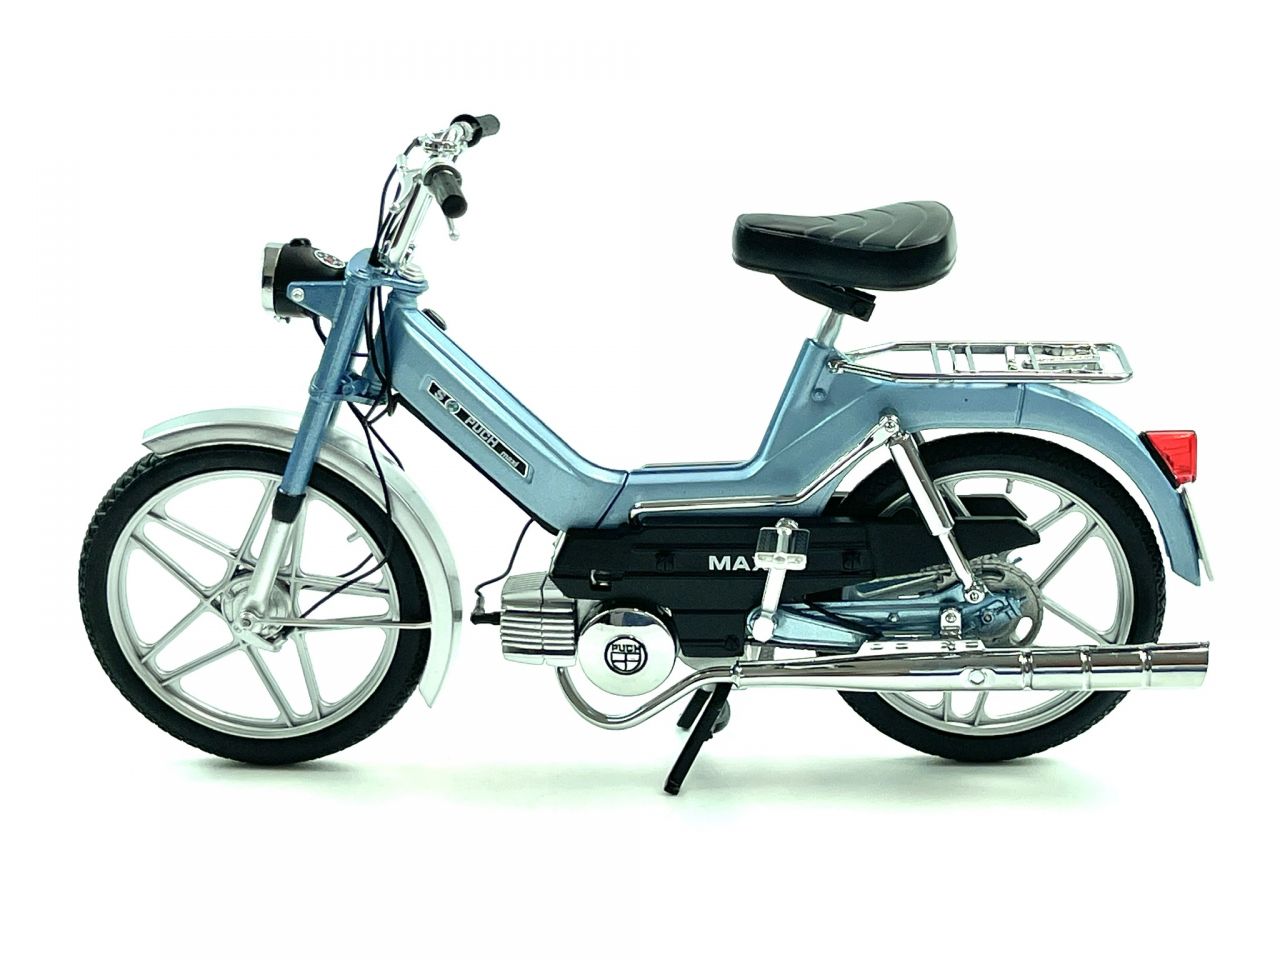 Mofa Modell Maßstab 1:10 PUCH Maxi S hellblau-metallic von 50cc Legends Moped von BOOL-tec